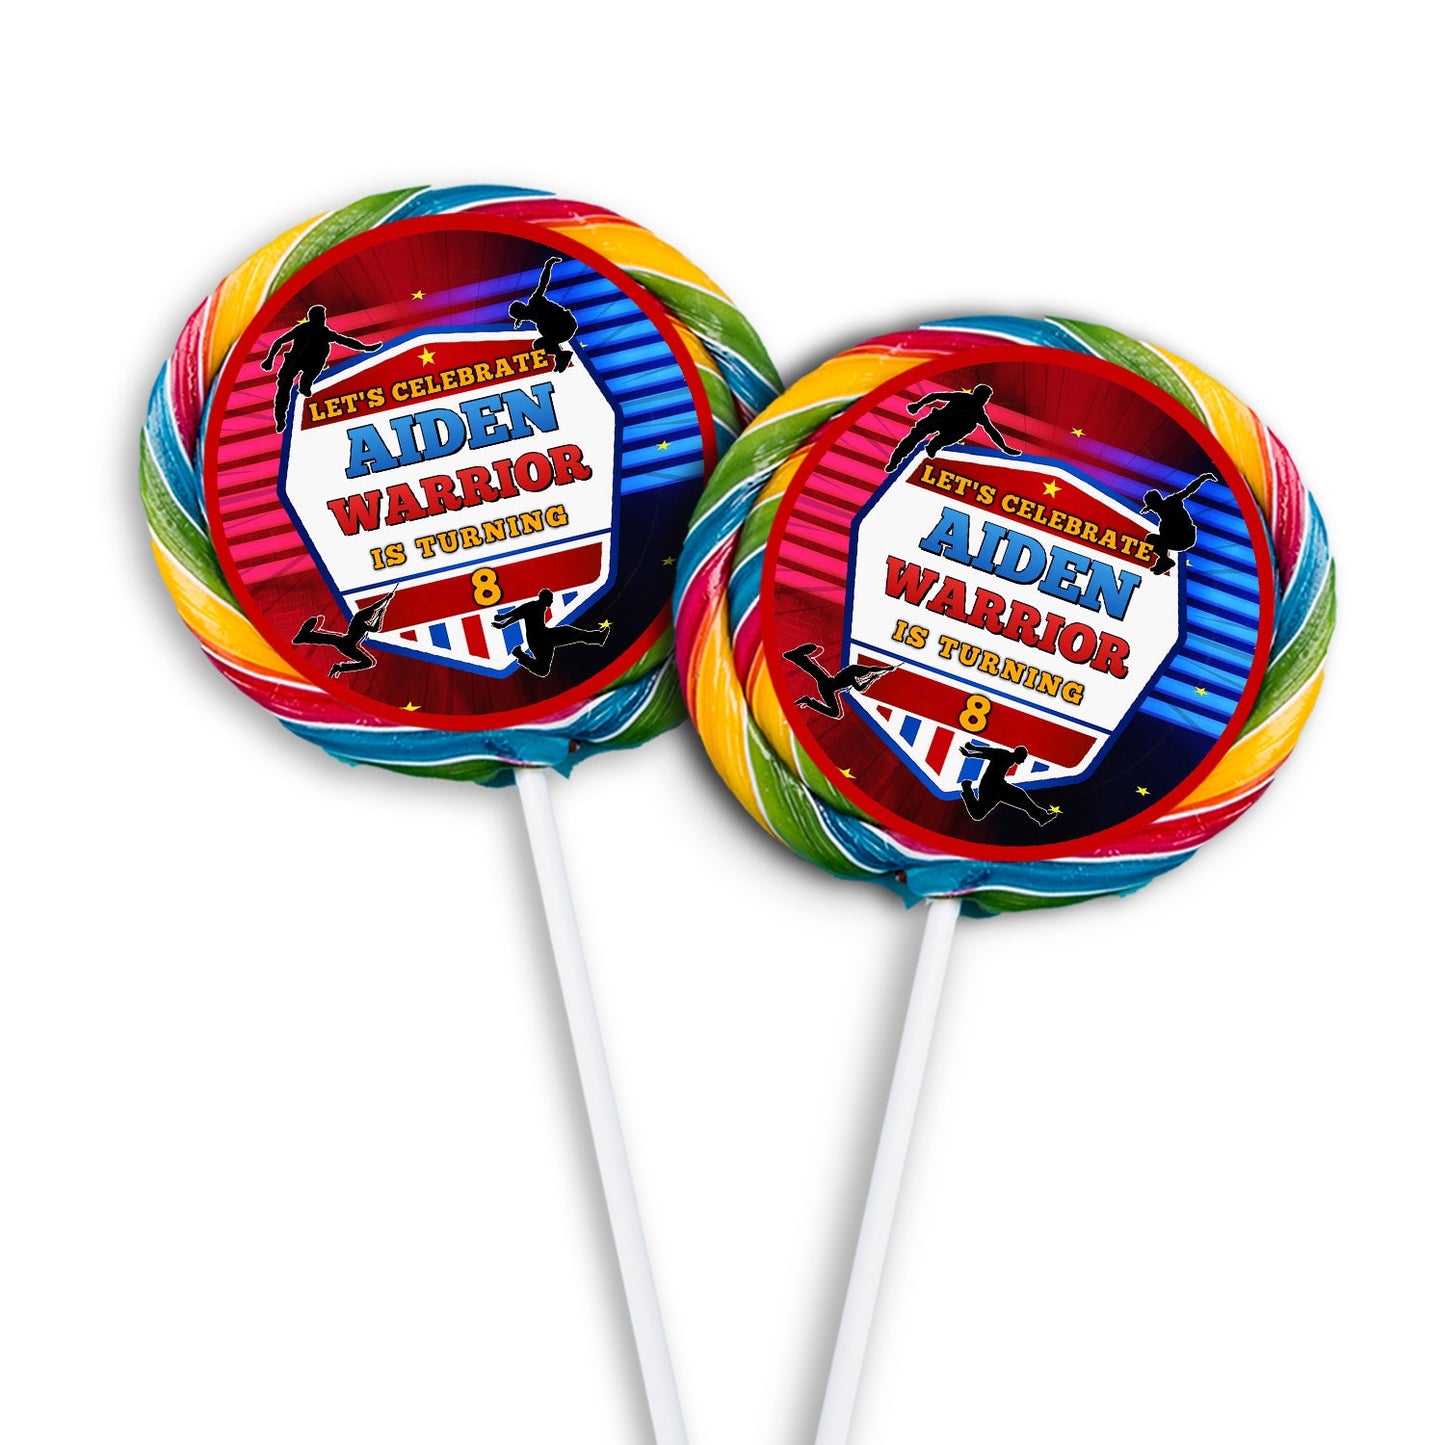 Ninja Warrior themed lollipop label